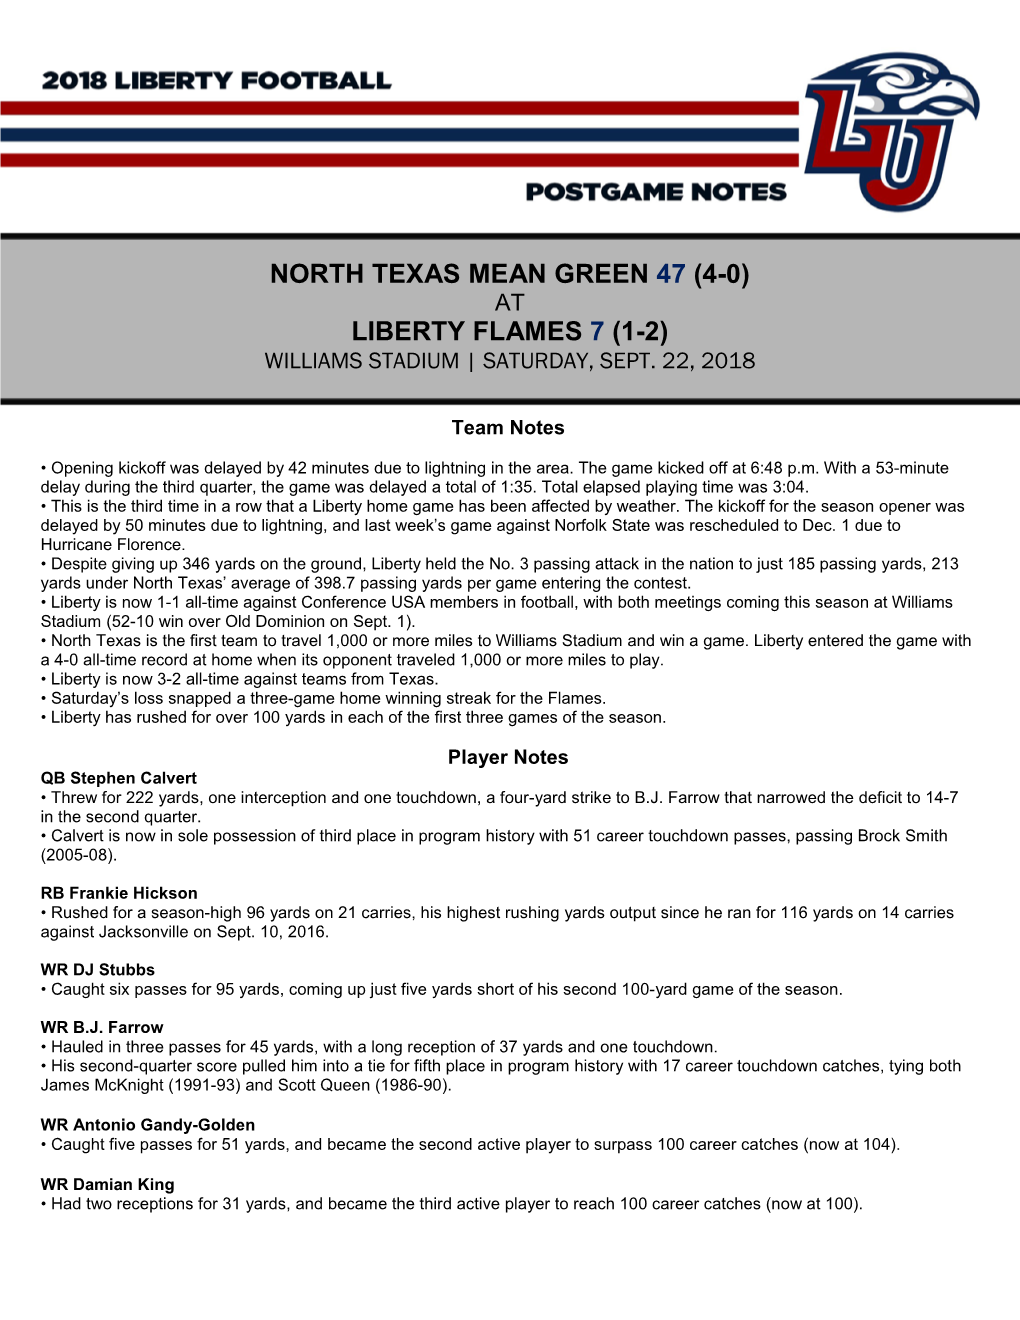 North Texas Mean Green 47 (4-0) Liberty Flames 7 (1-2)